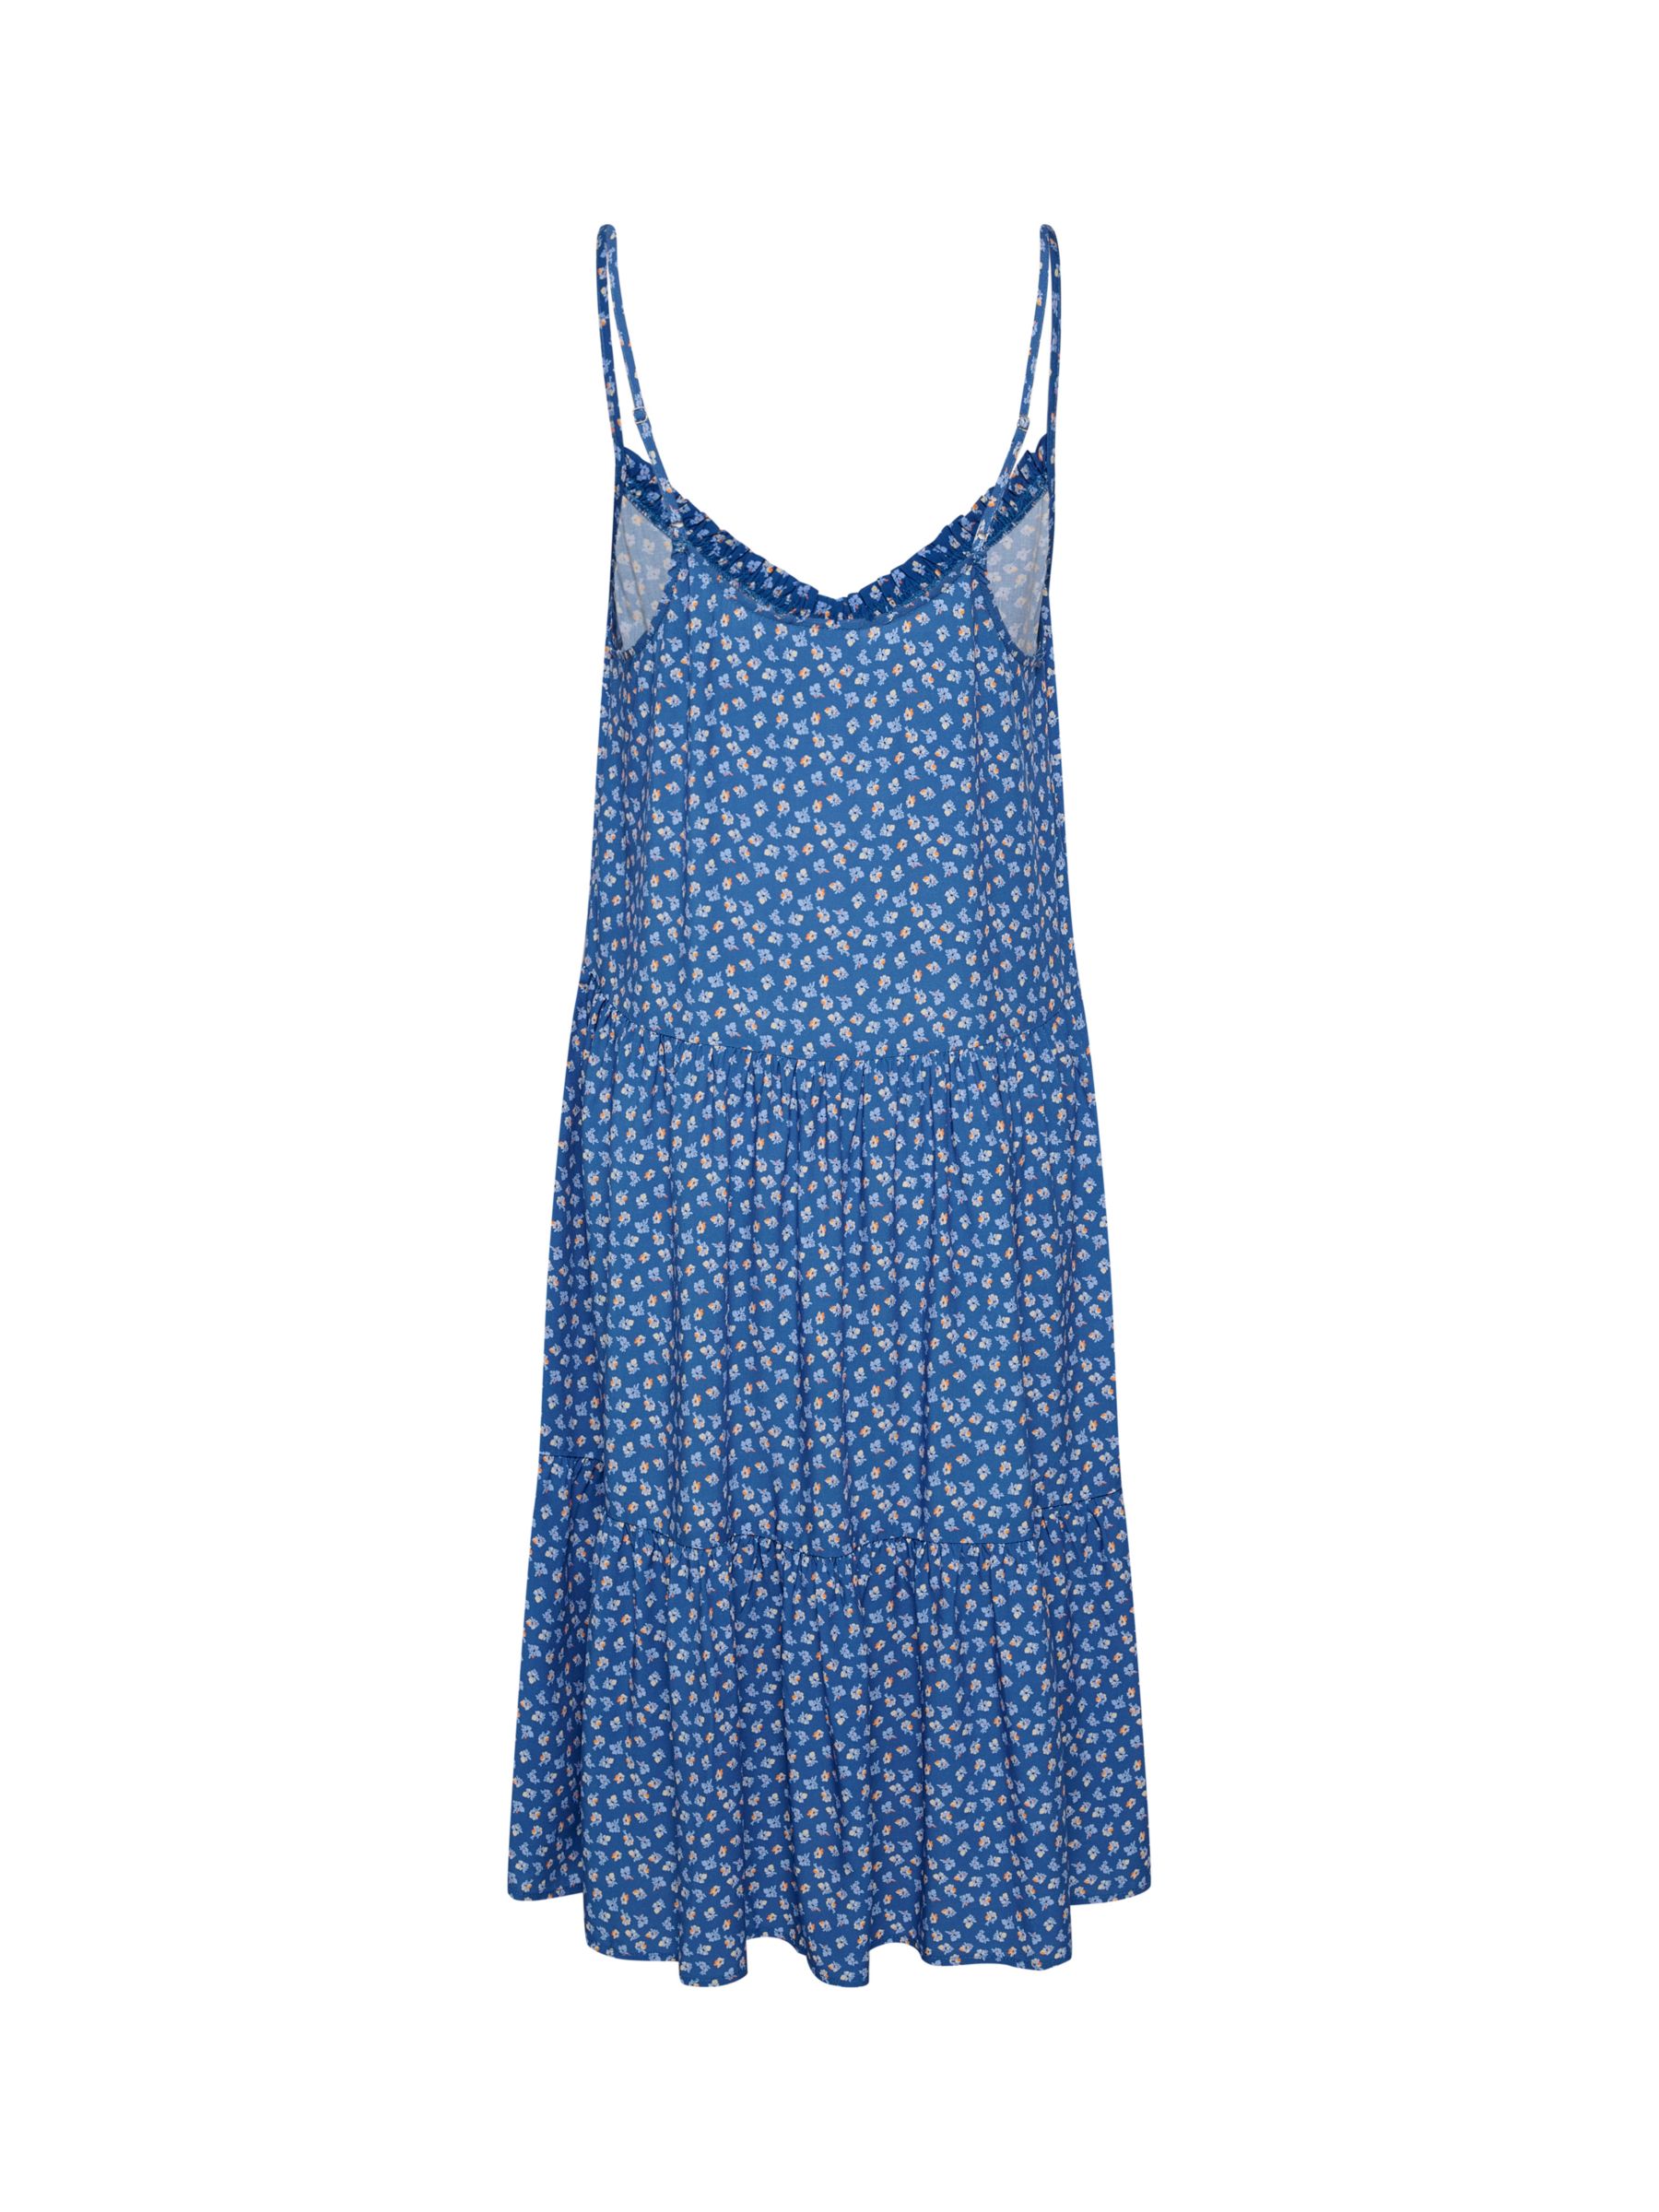 Saint Tropez Eda Strappy Dress, Blue Ditsy Floral at John Lewis & Partners